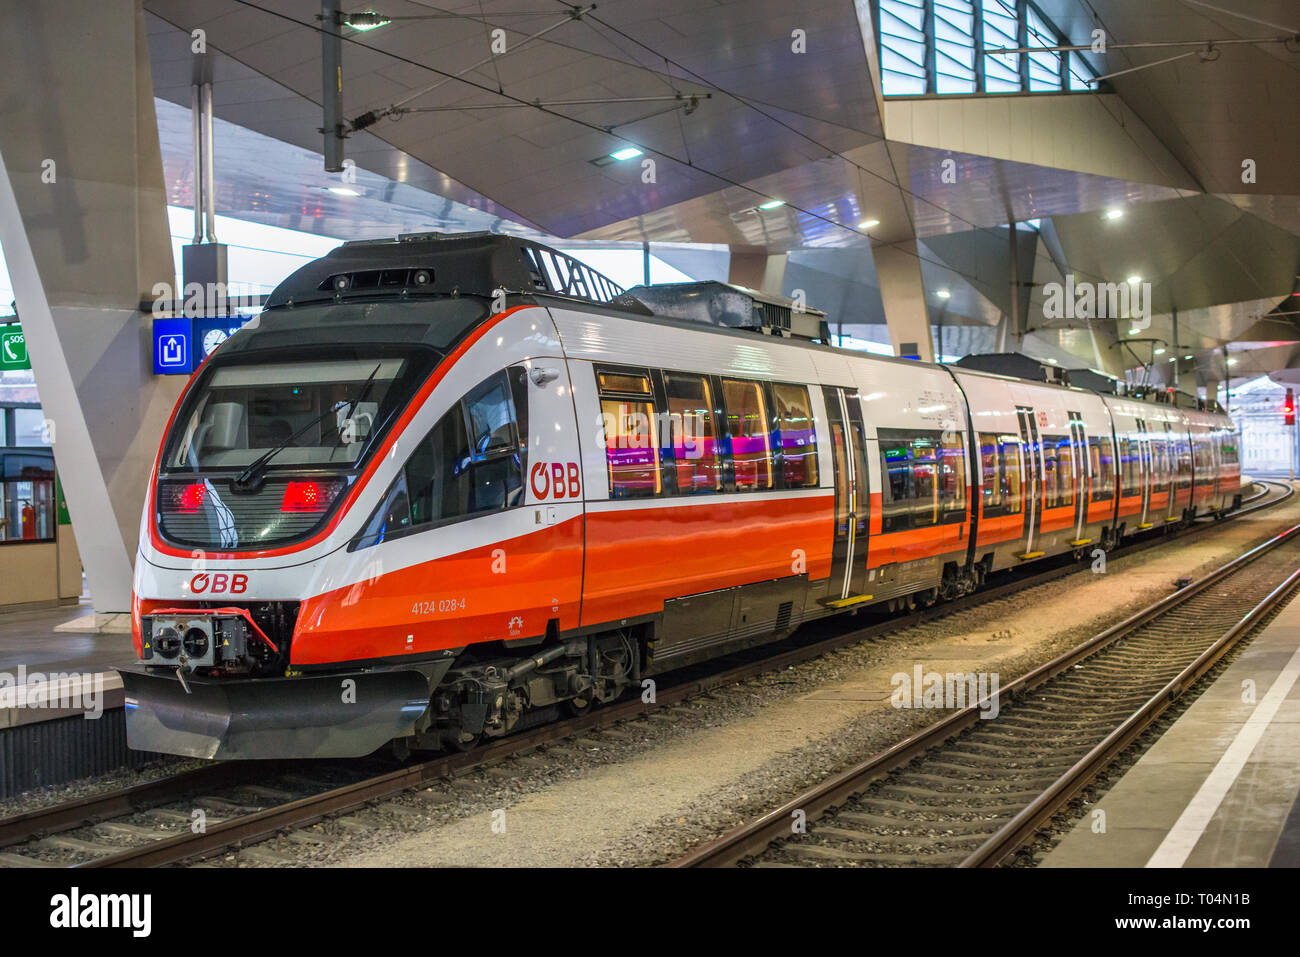 ÖBB Talent railcar approaching platform at Vienna Central station Hauptbanhauf, Austria. Stock Photo